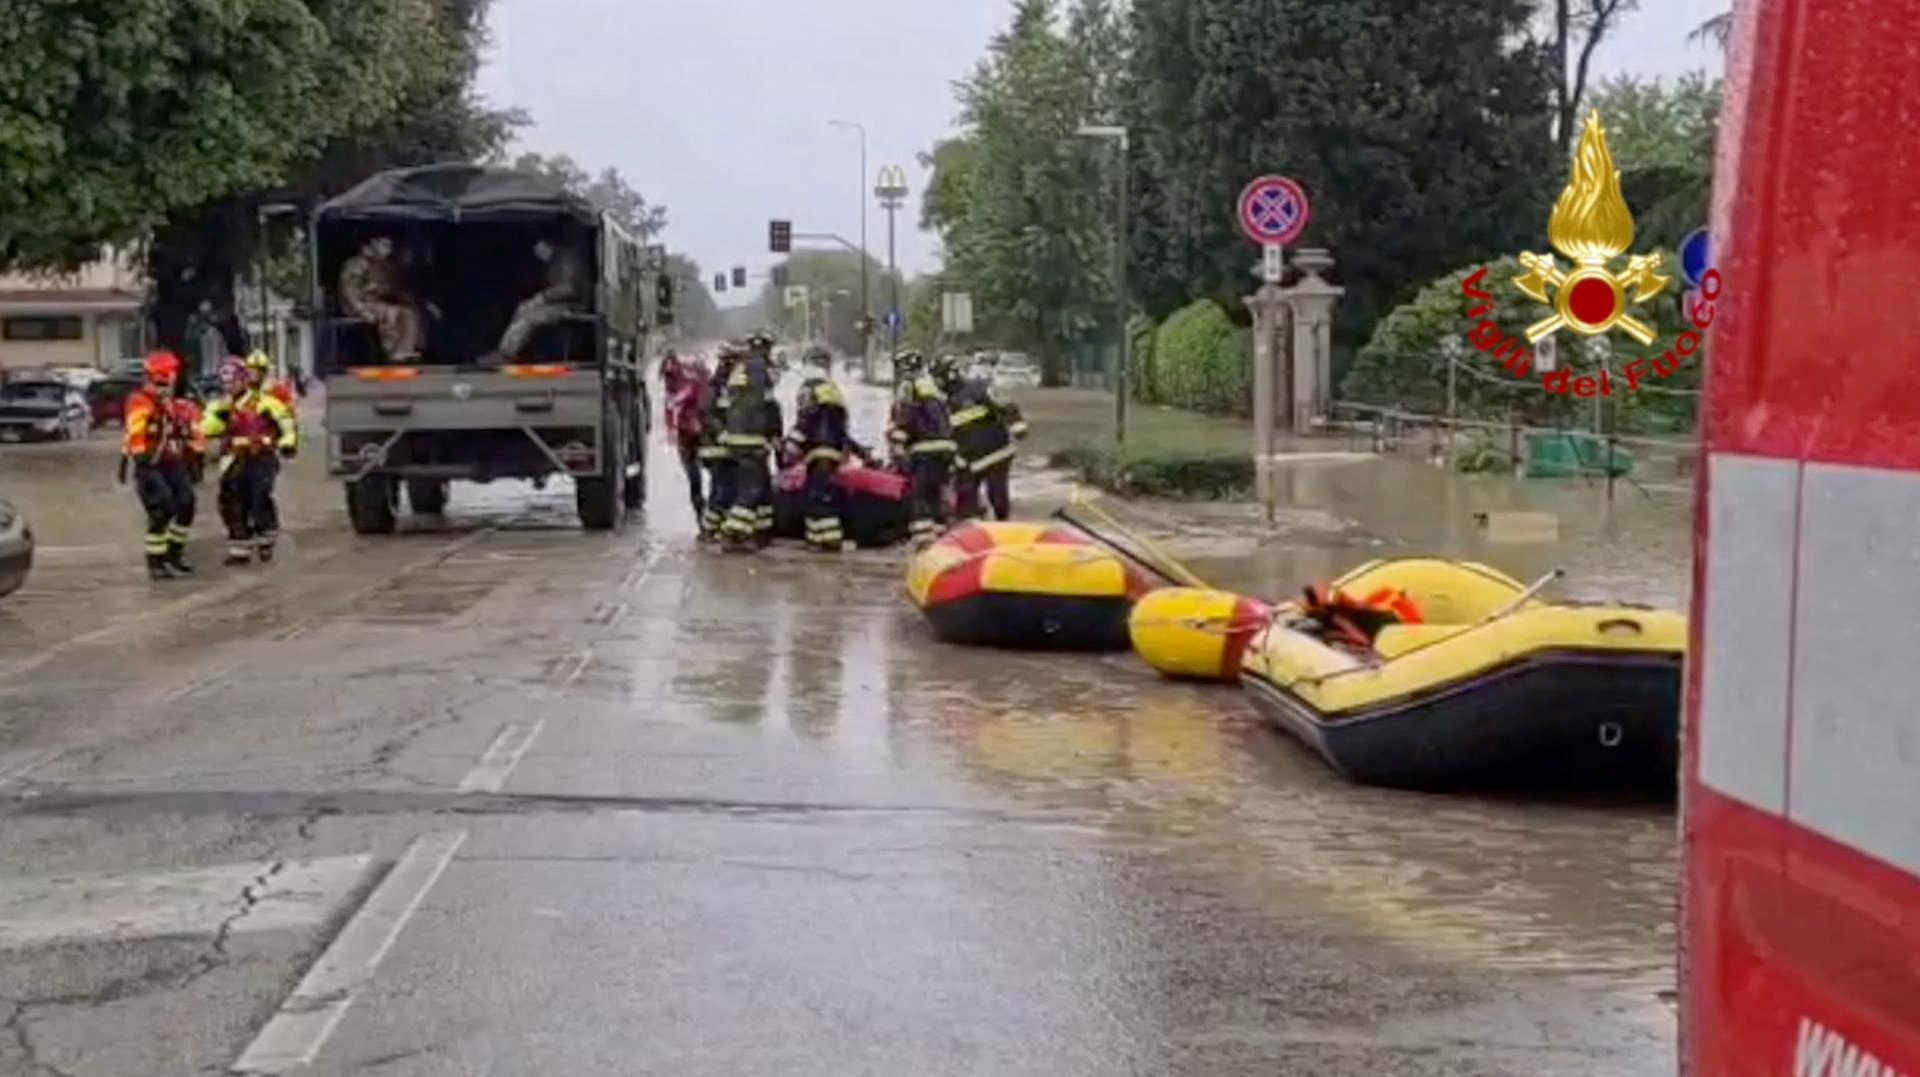 Emergency services work in Emilia Romagna